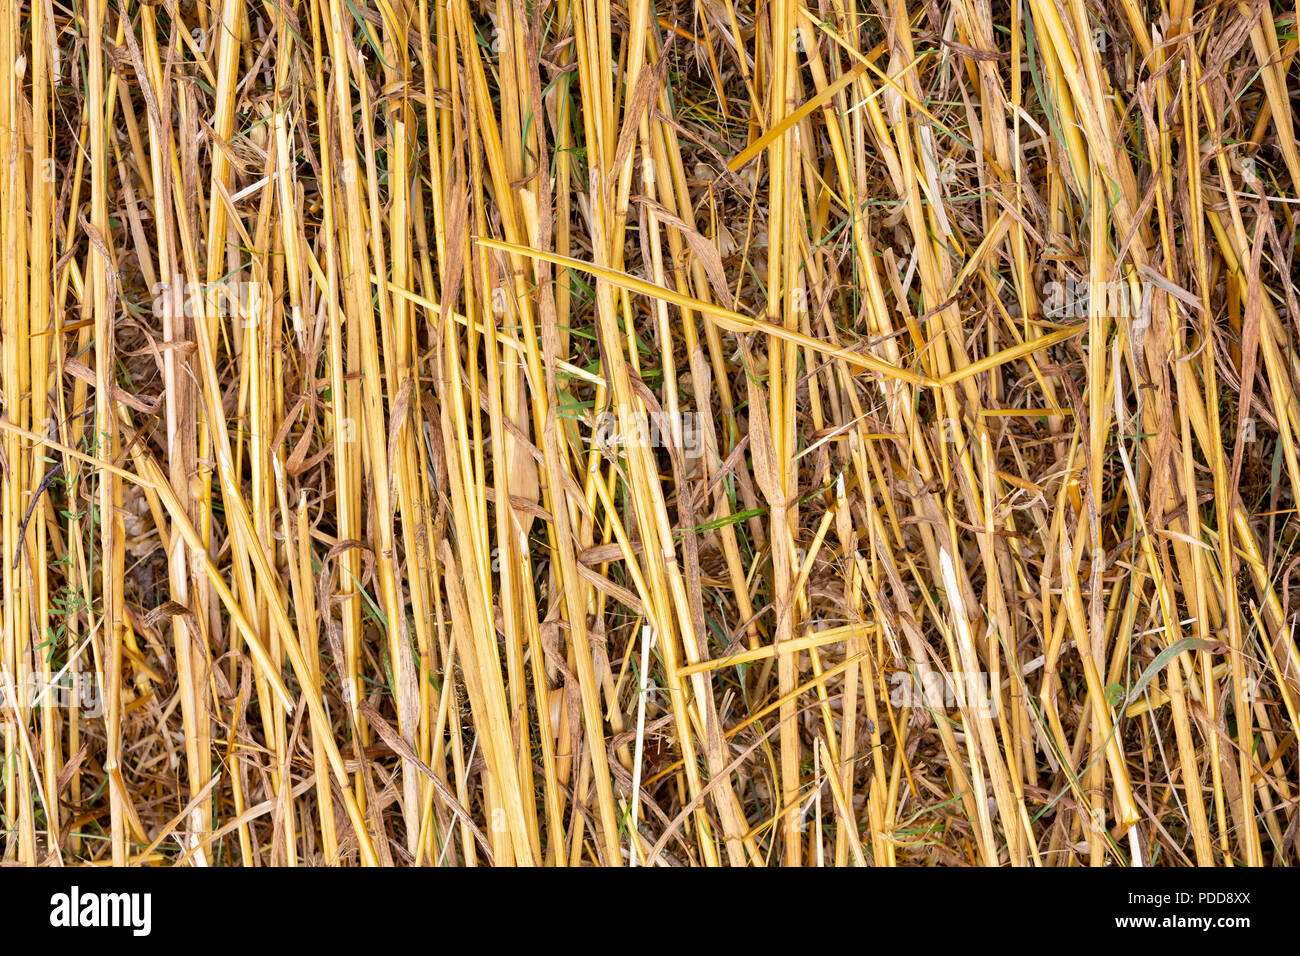 Straw, Dry Straw, Hay Straw Yellow Background Texture Stock Photo - Image  of feed, farm: 112238112